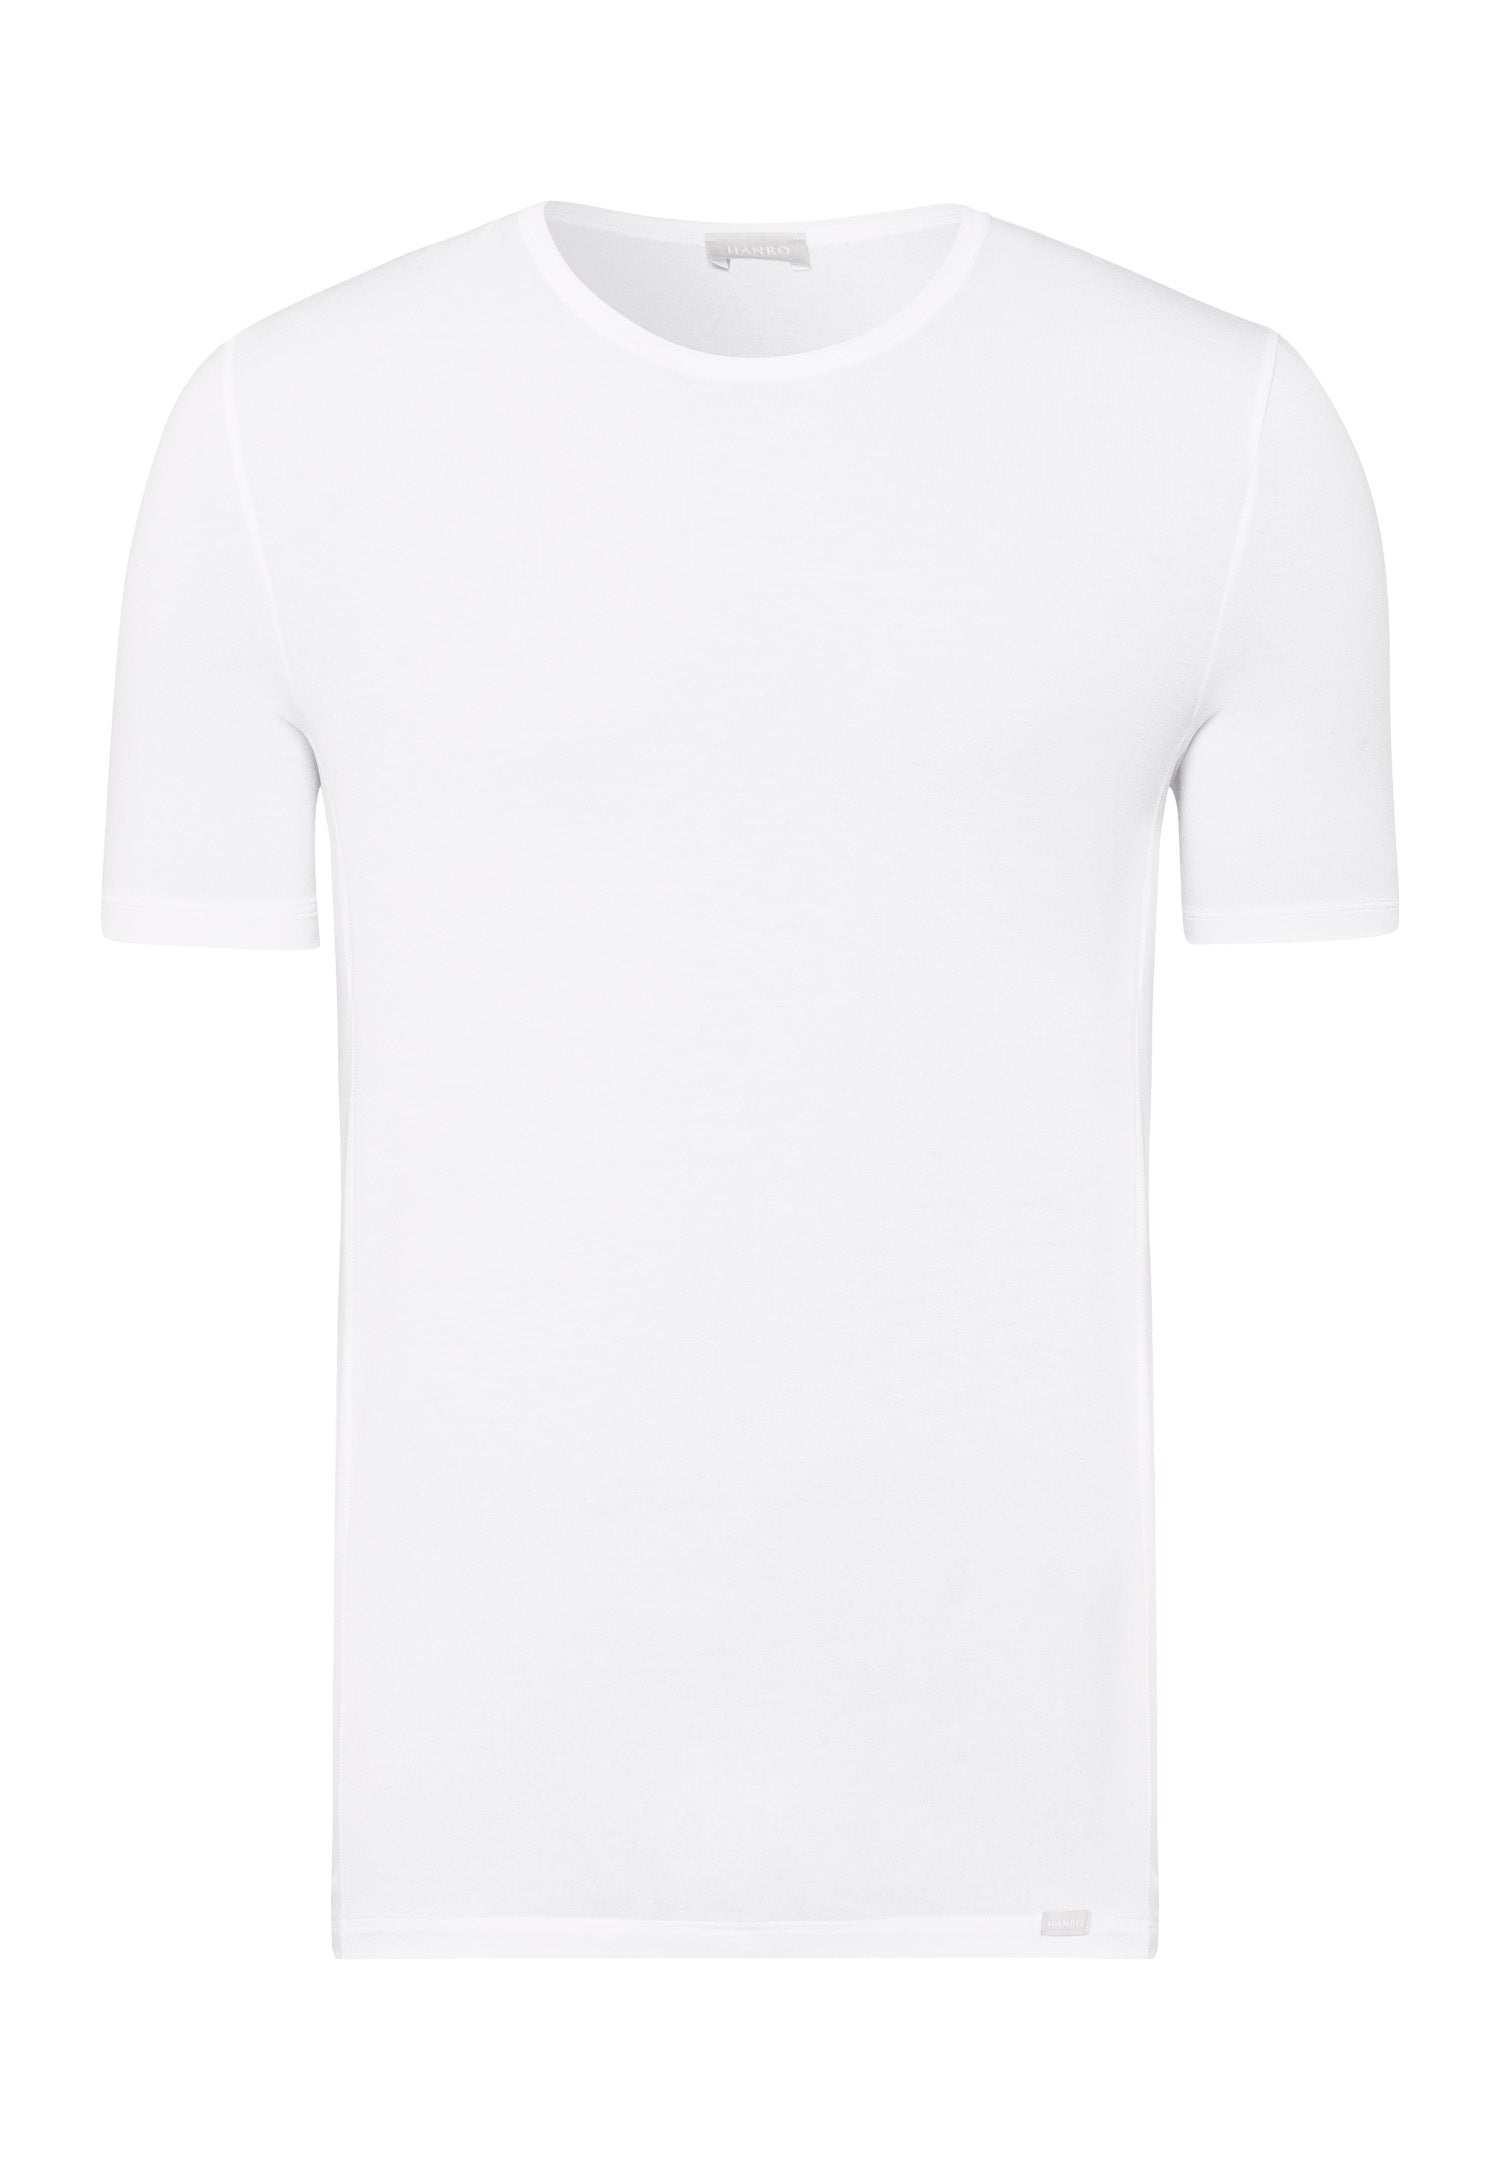 73184 Natural Function Short Sleeve Shirt - 101 White